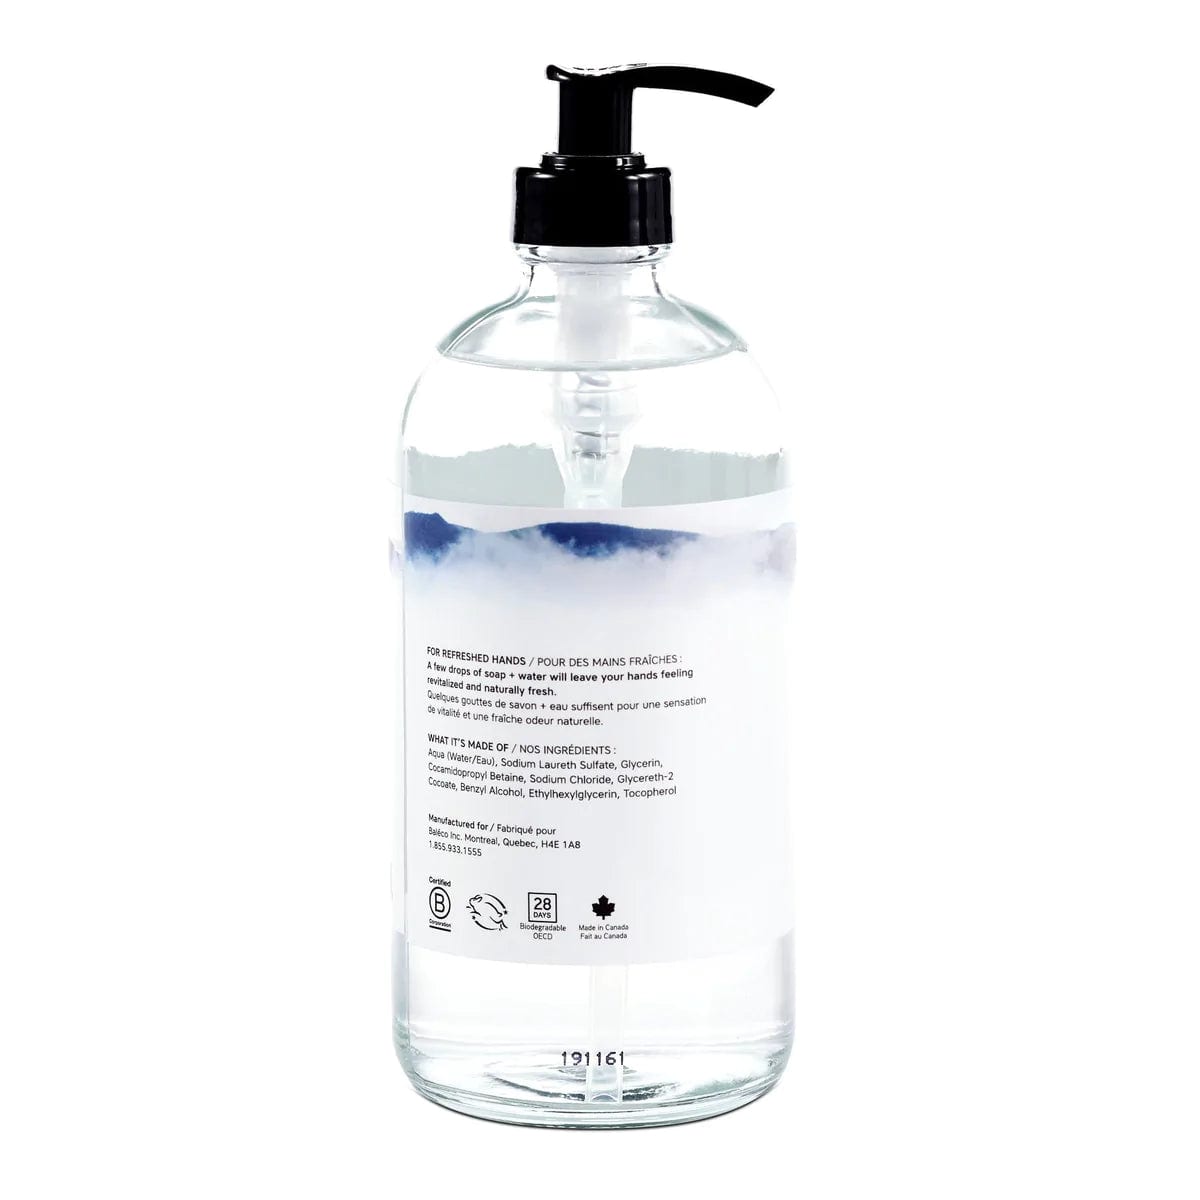 Fragrance-free liquid hand soap